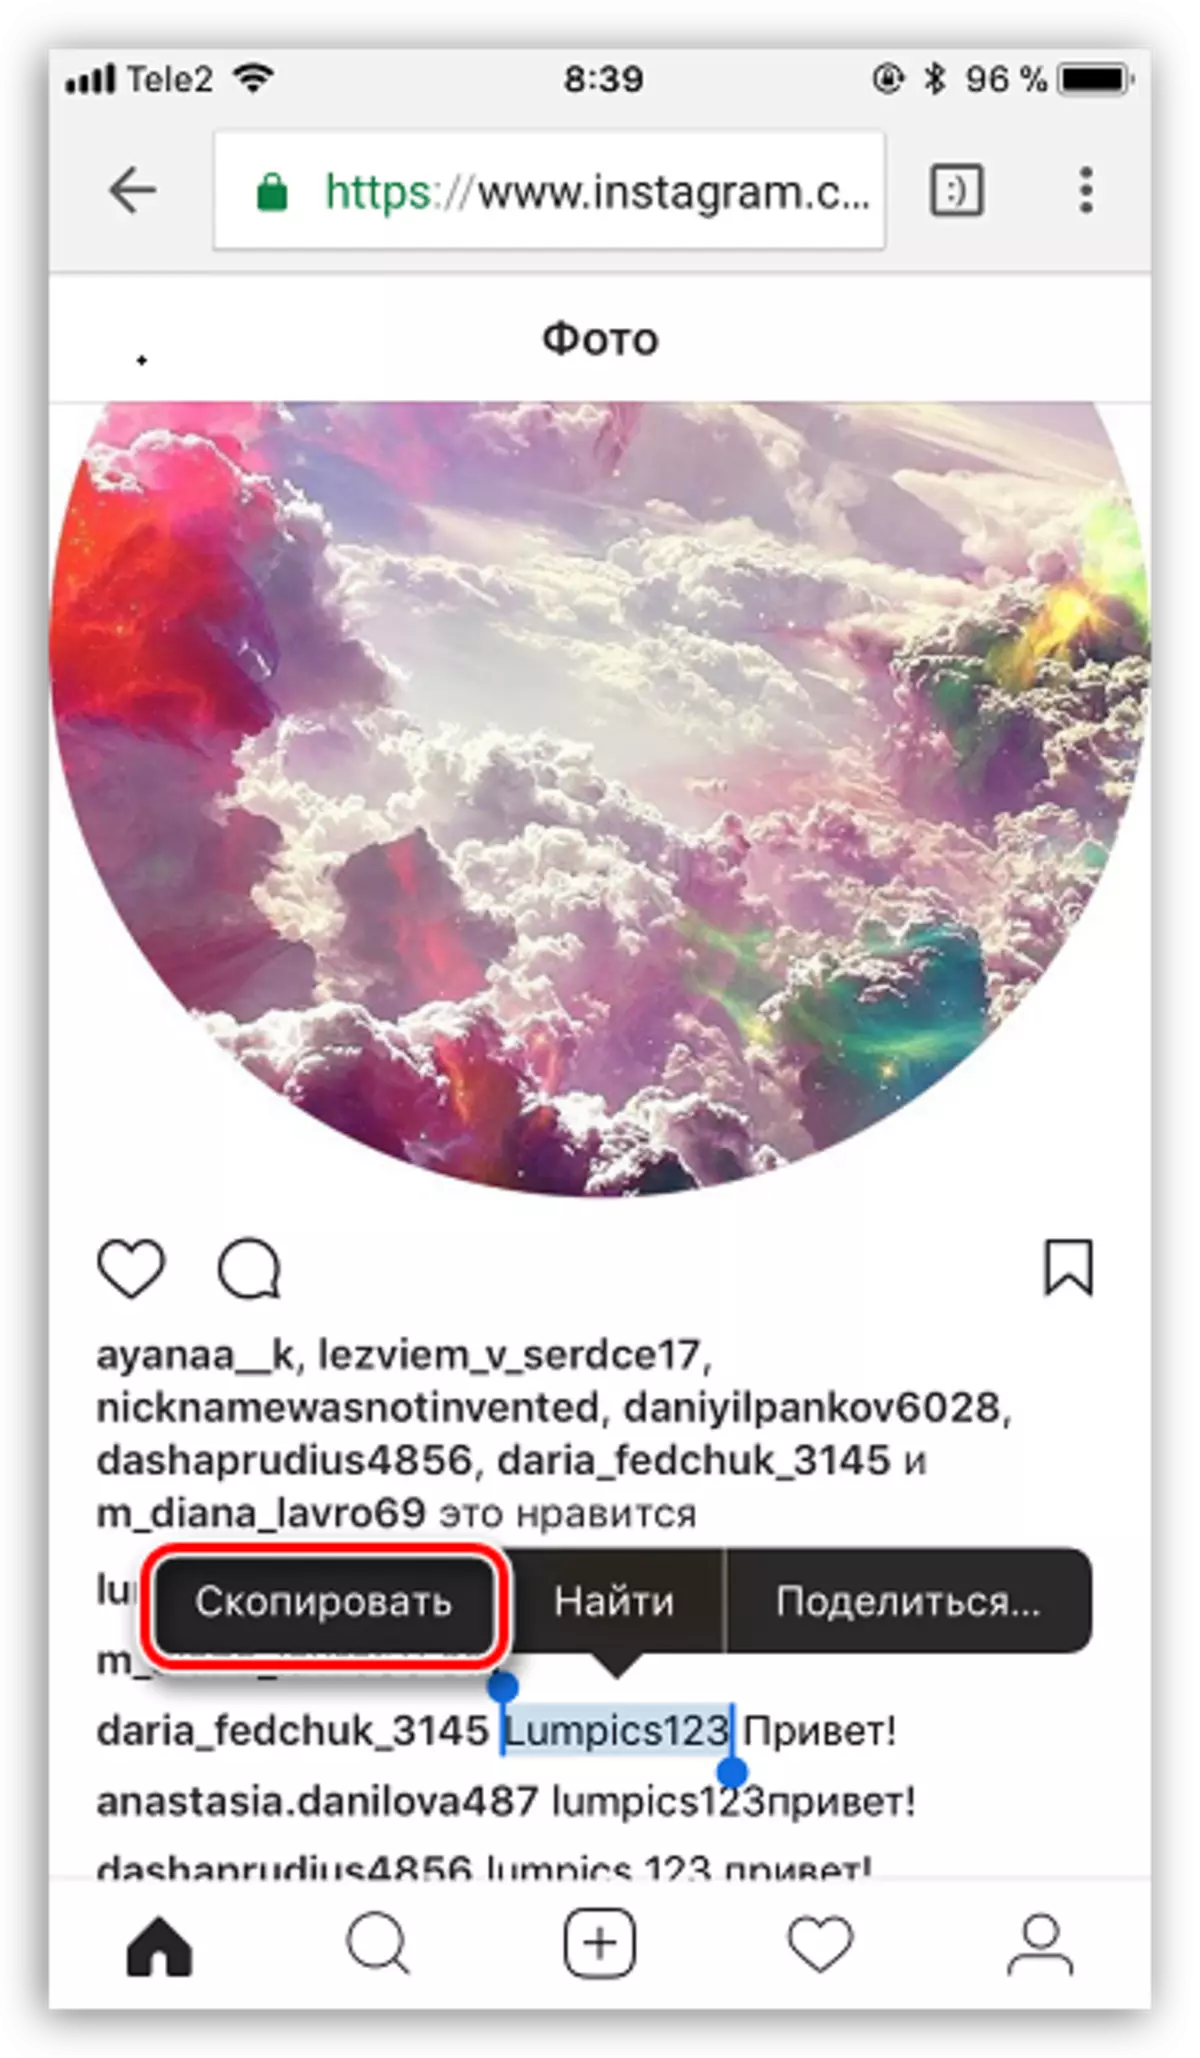 Kopiranje teksta iz Instagrama na smartphone